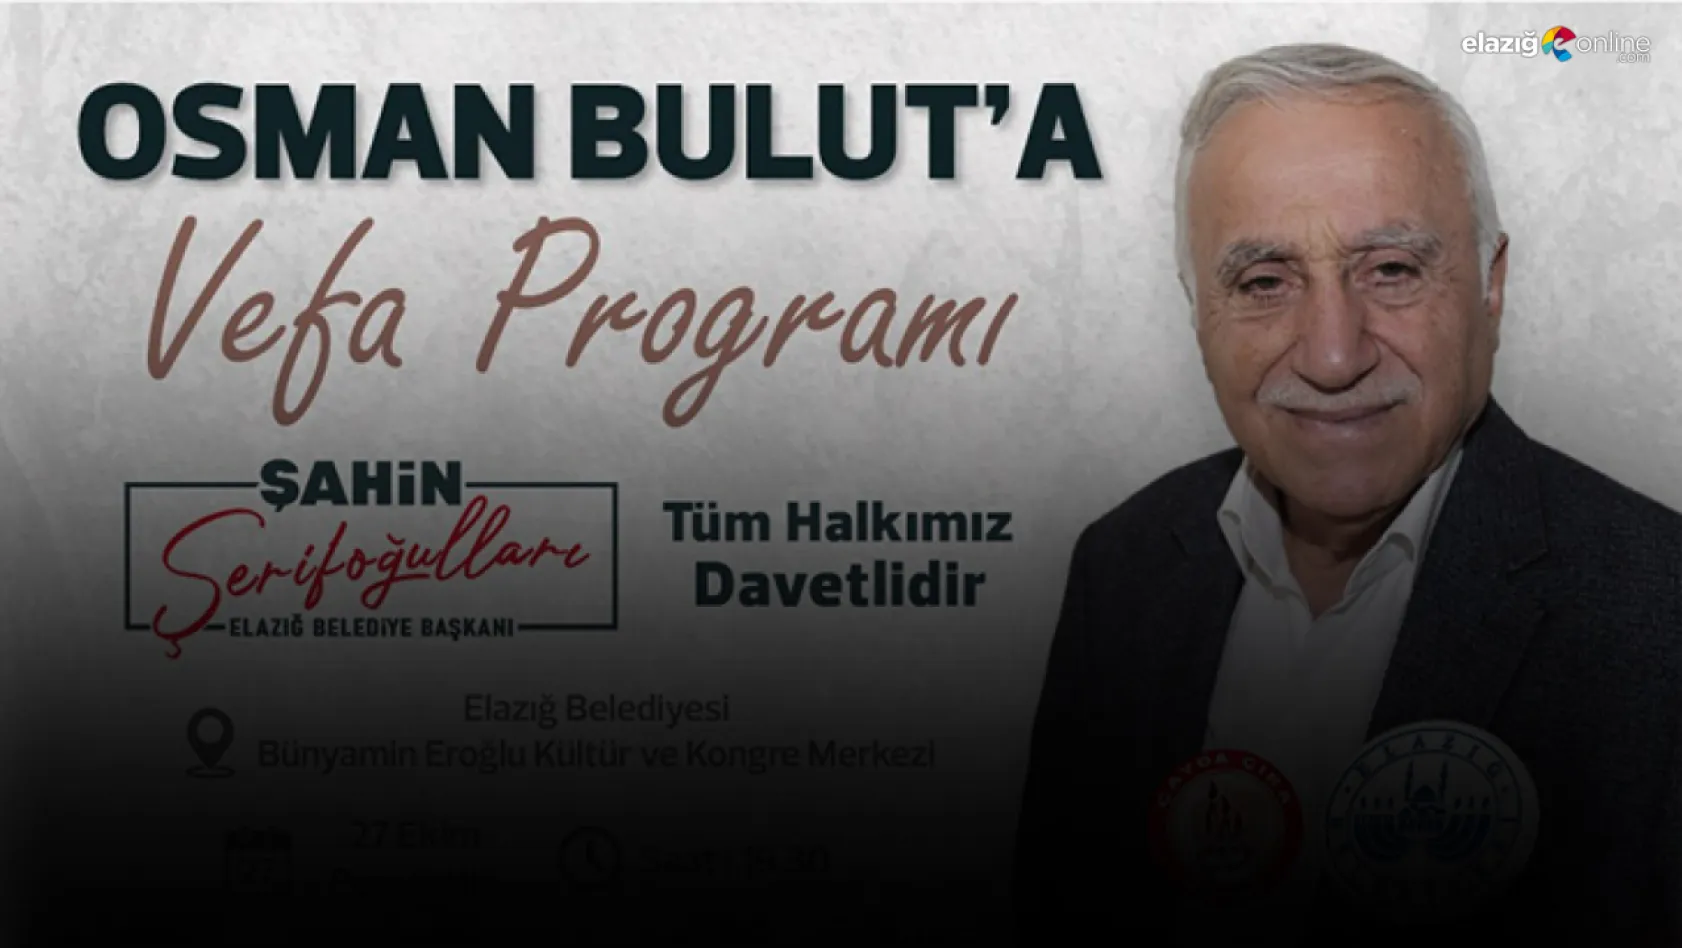 Harput musikisinin usta ismi Osman Bulut'a vefa programı!